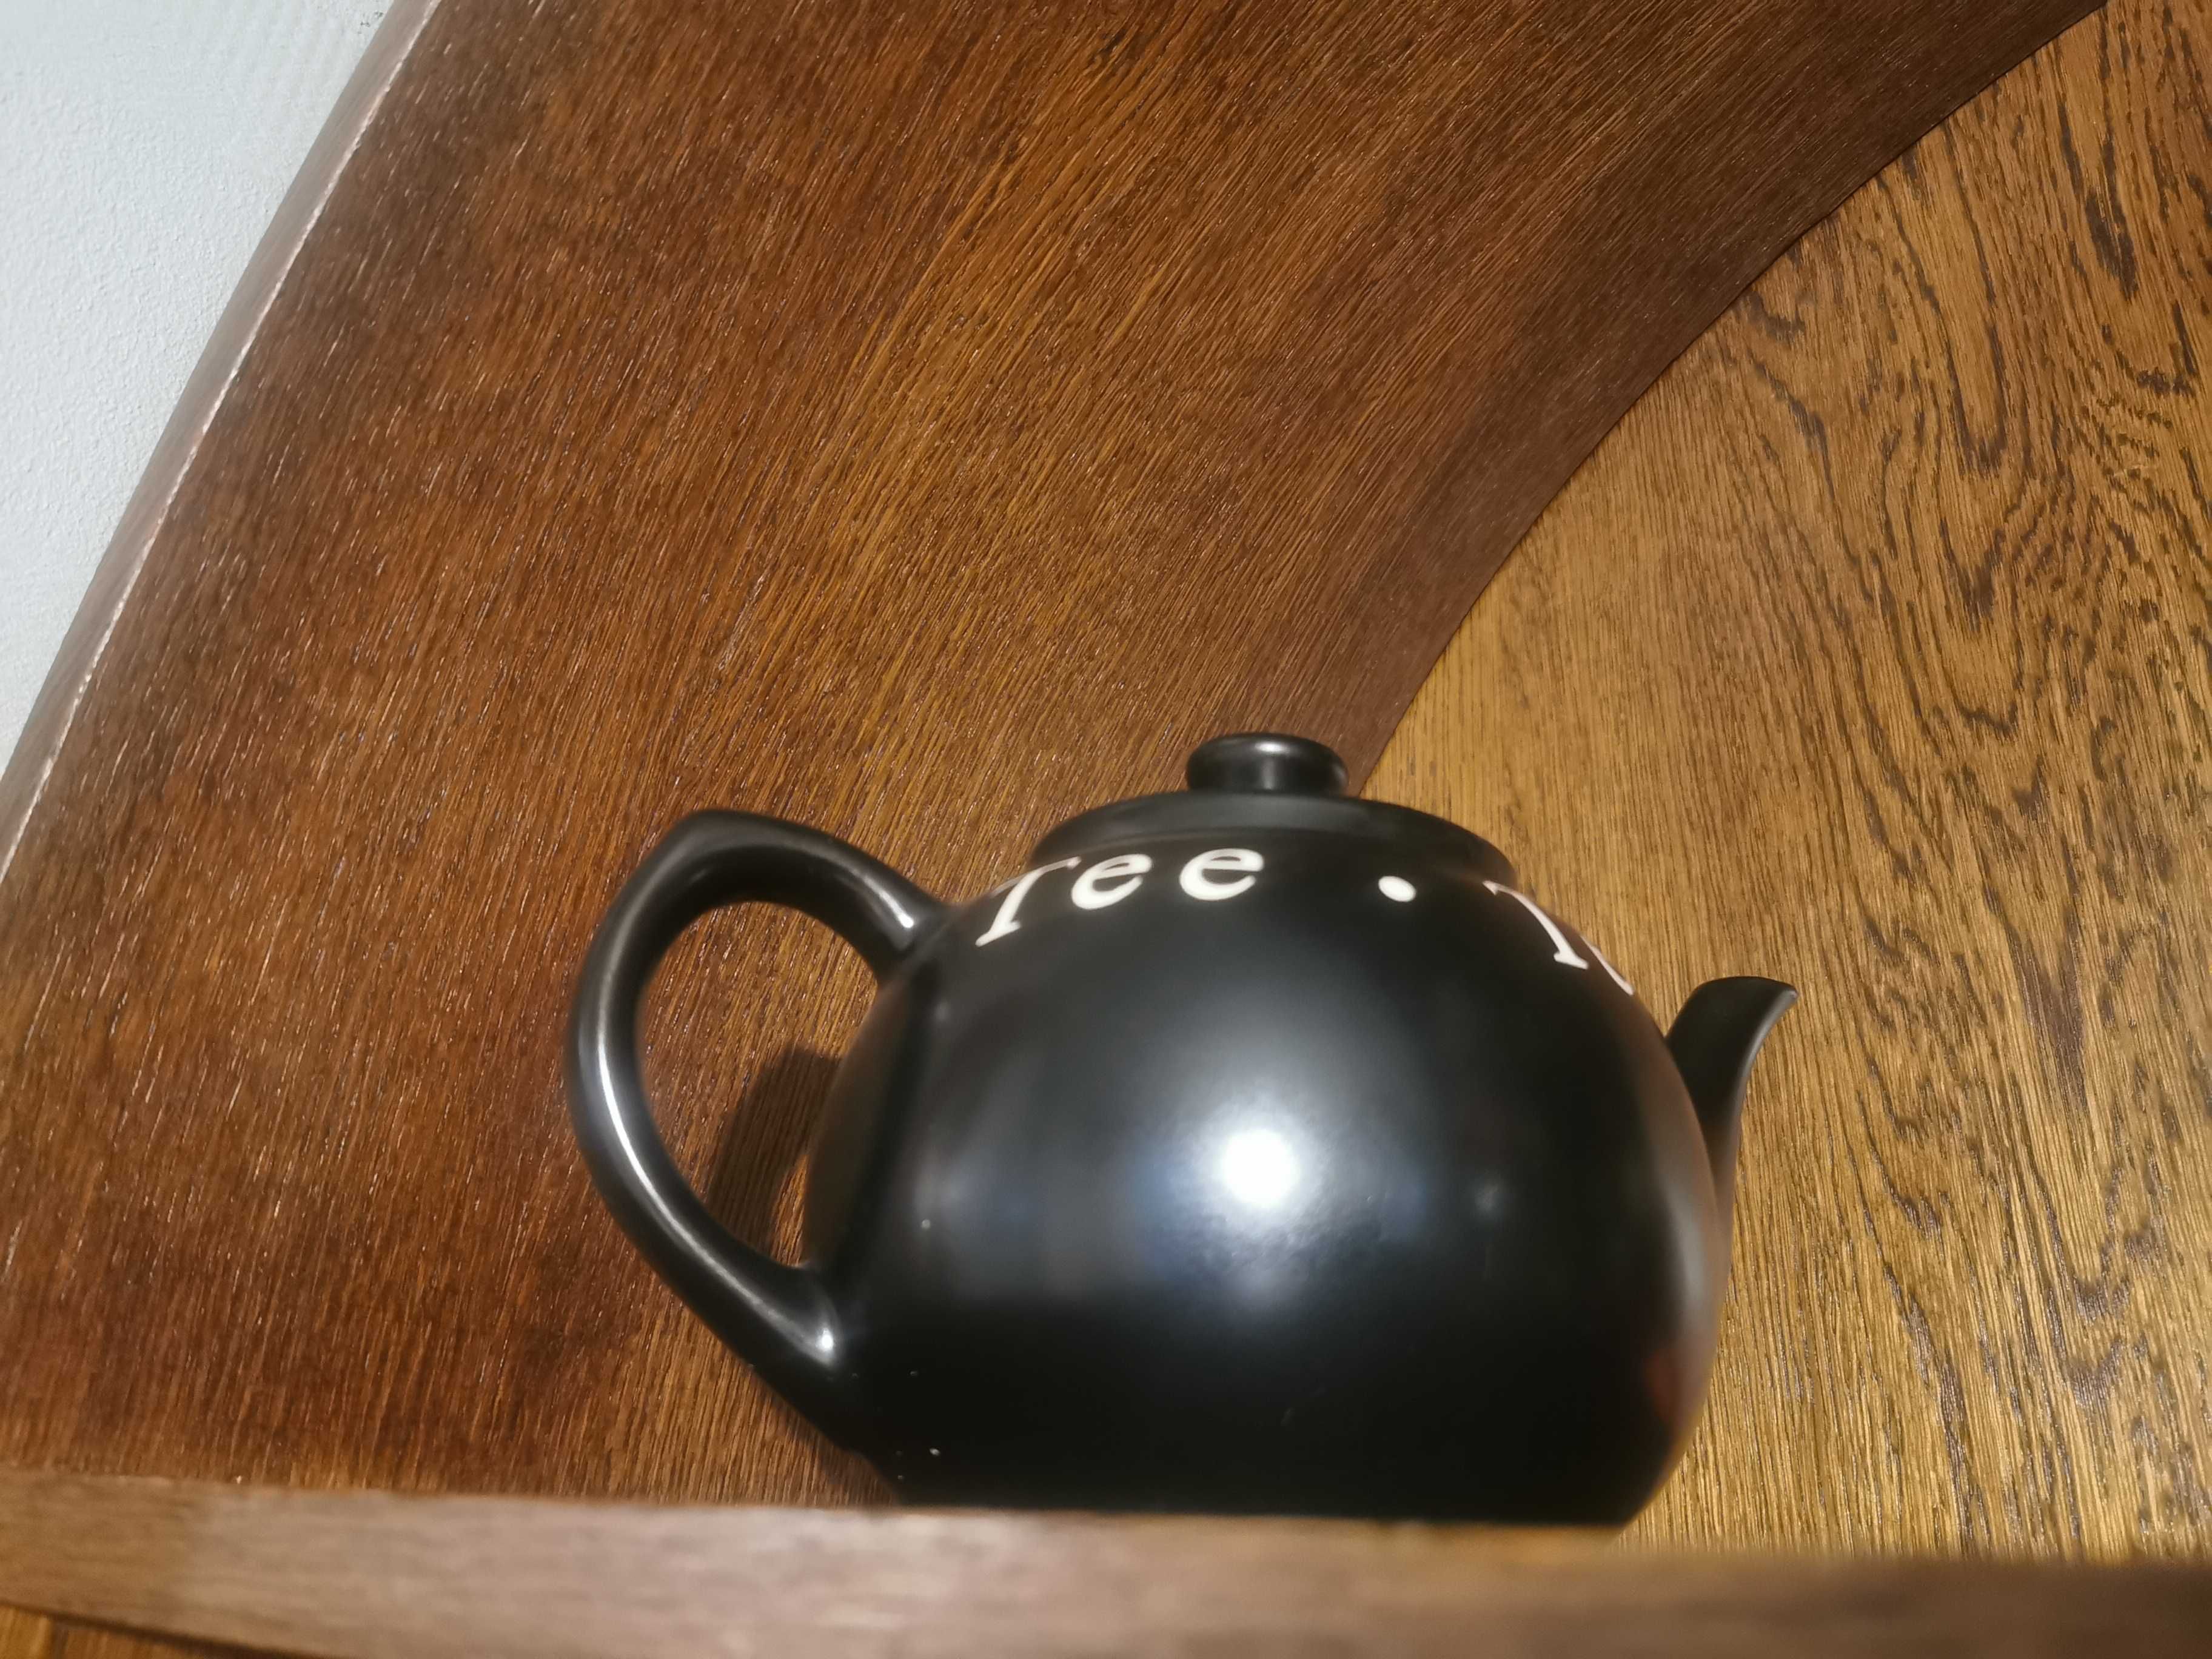 Ceainic negru ceramica